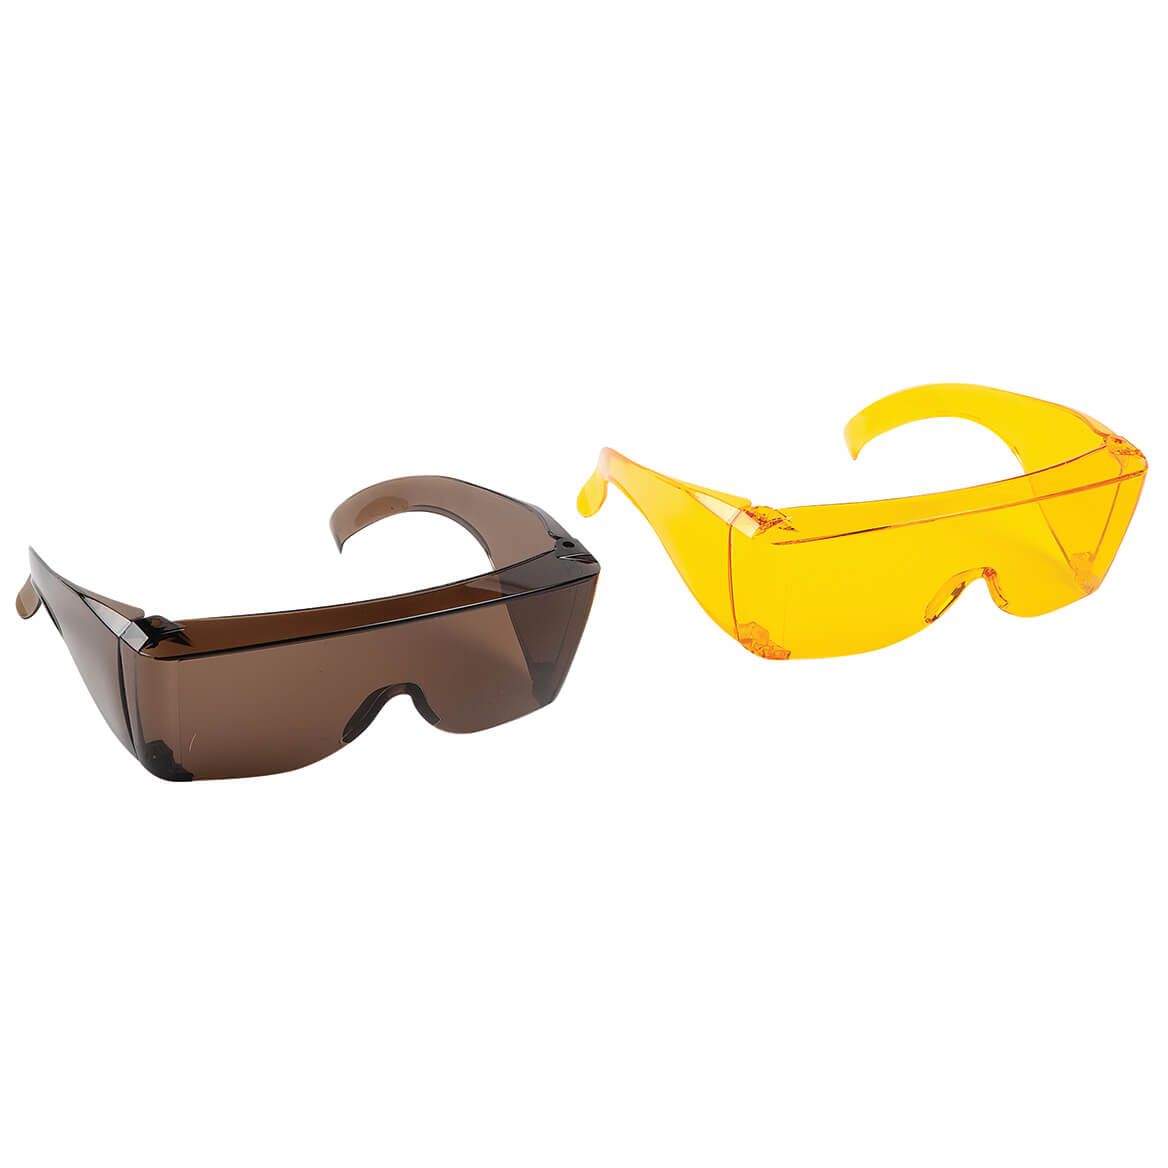 Wrap Around Sun Glasses, Set Yellow and Brown + '-' + 376163